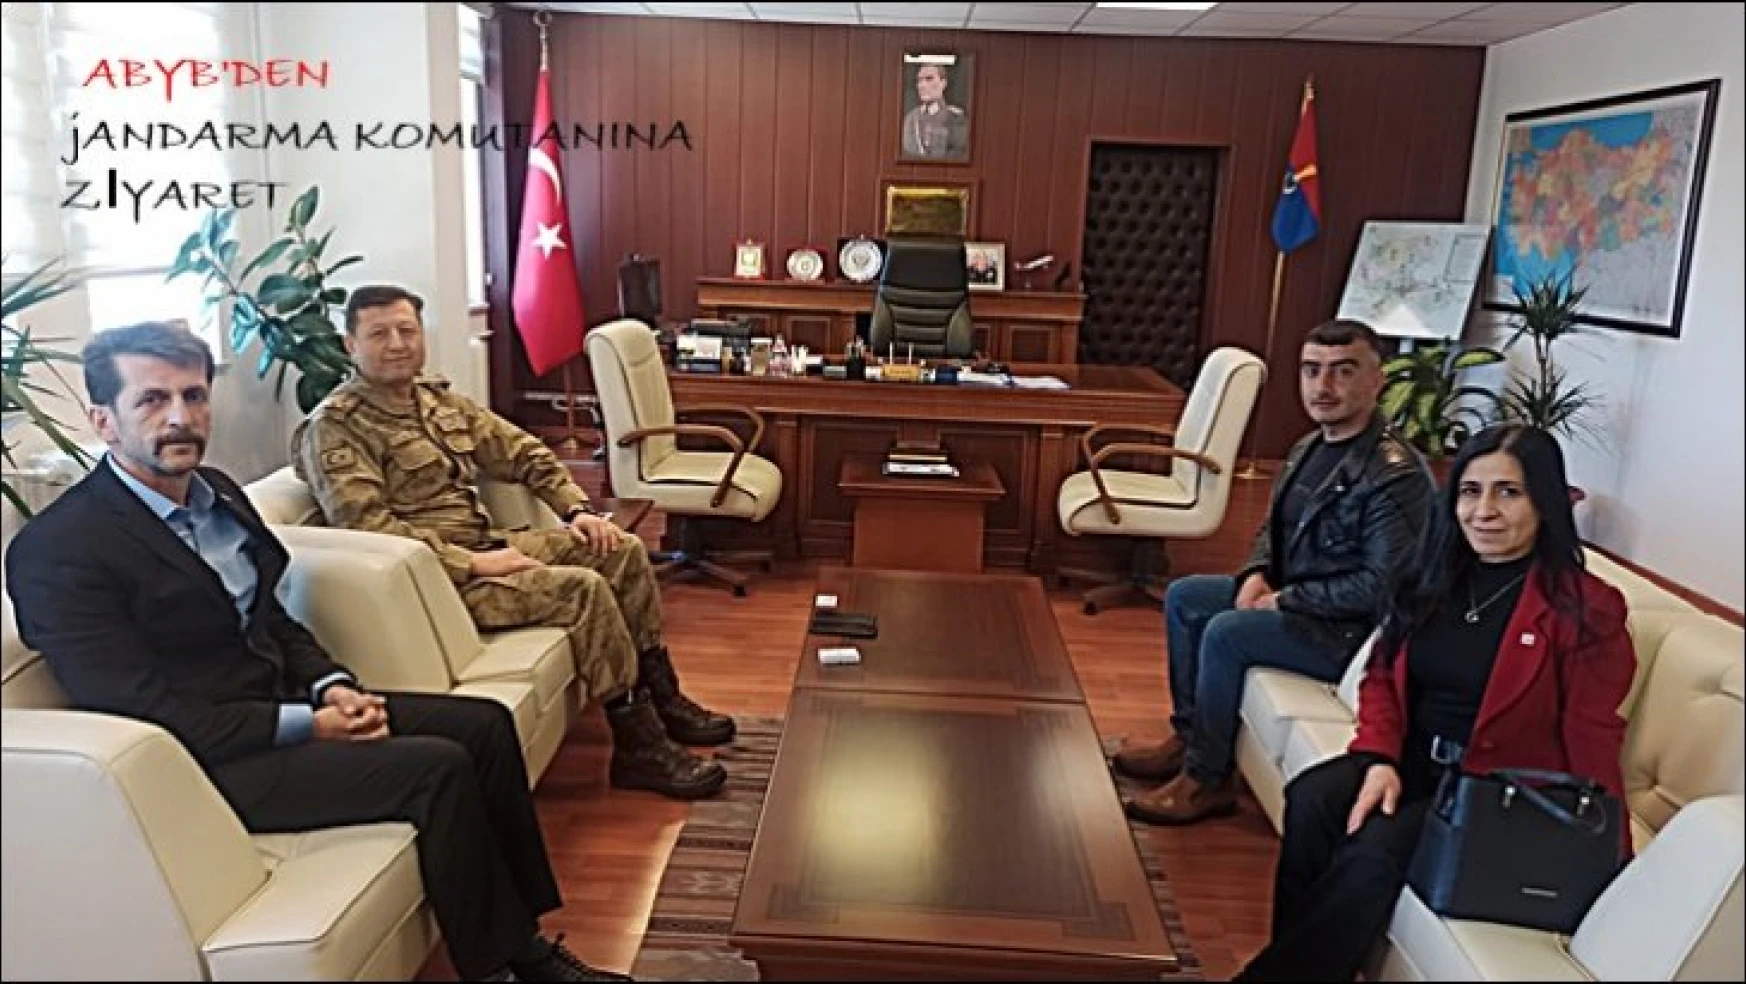 ABYB' den İl Jandarma Komutanı Ercan Altın'a Ziyaret